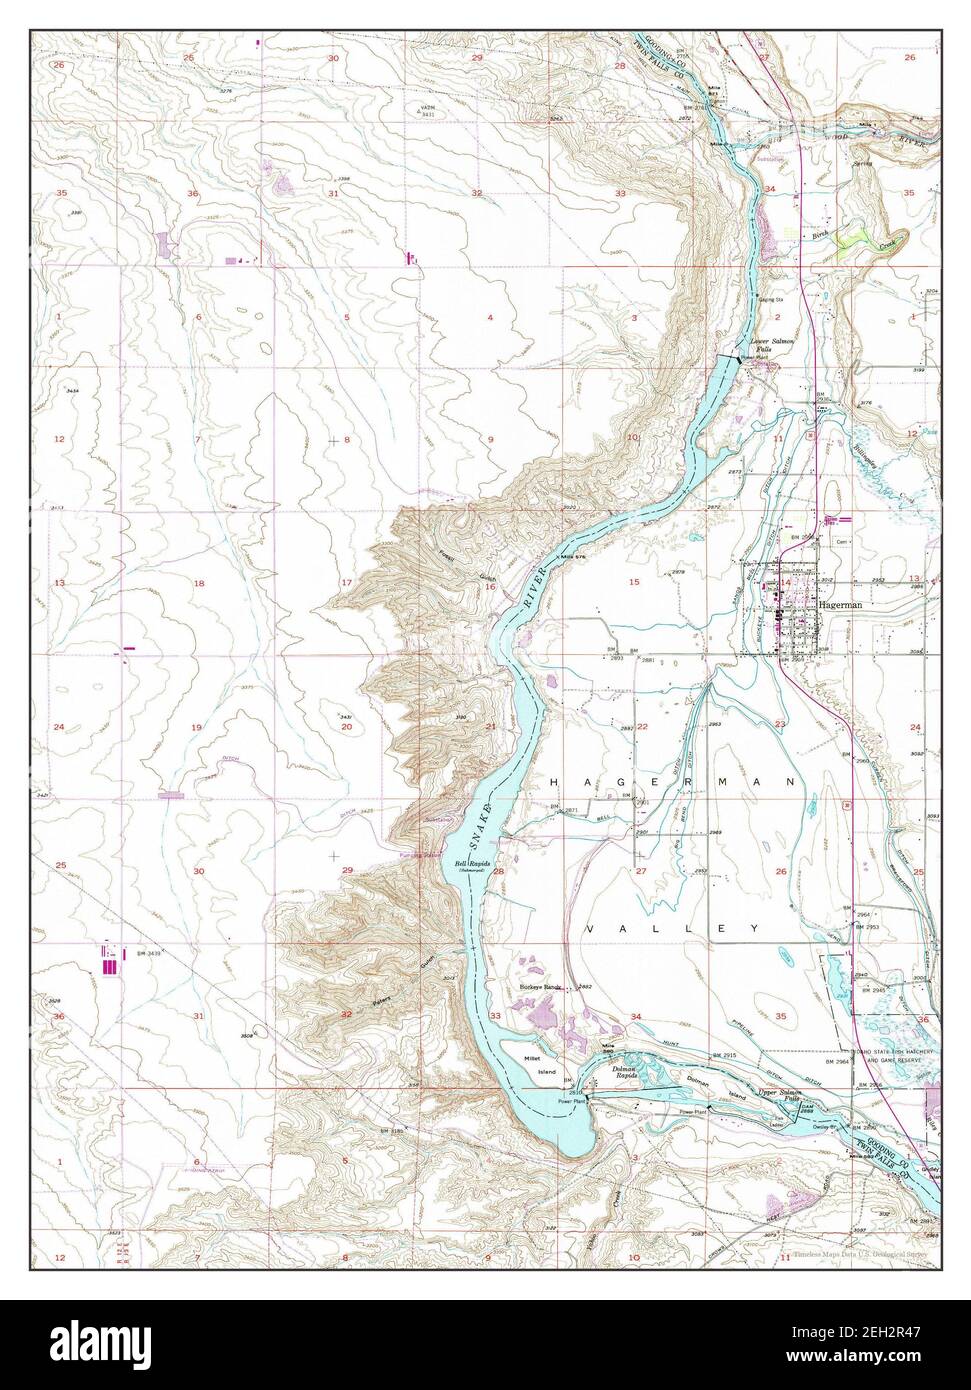 Hagerman, Idaho, map 1949, 1:24000, United States of America by Timeless Maps, data U.S. Geological Survey Stock Photo